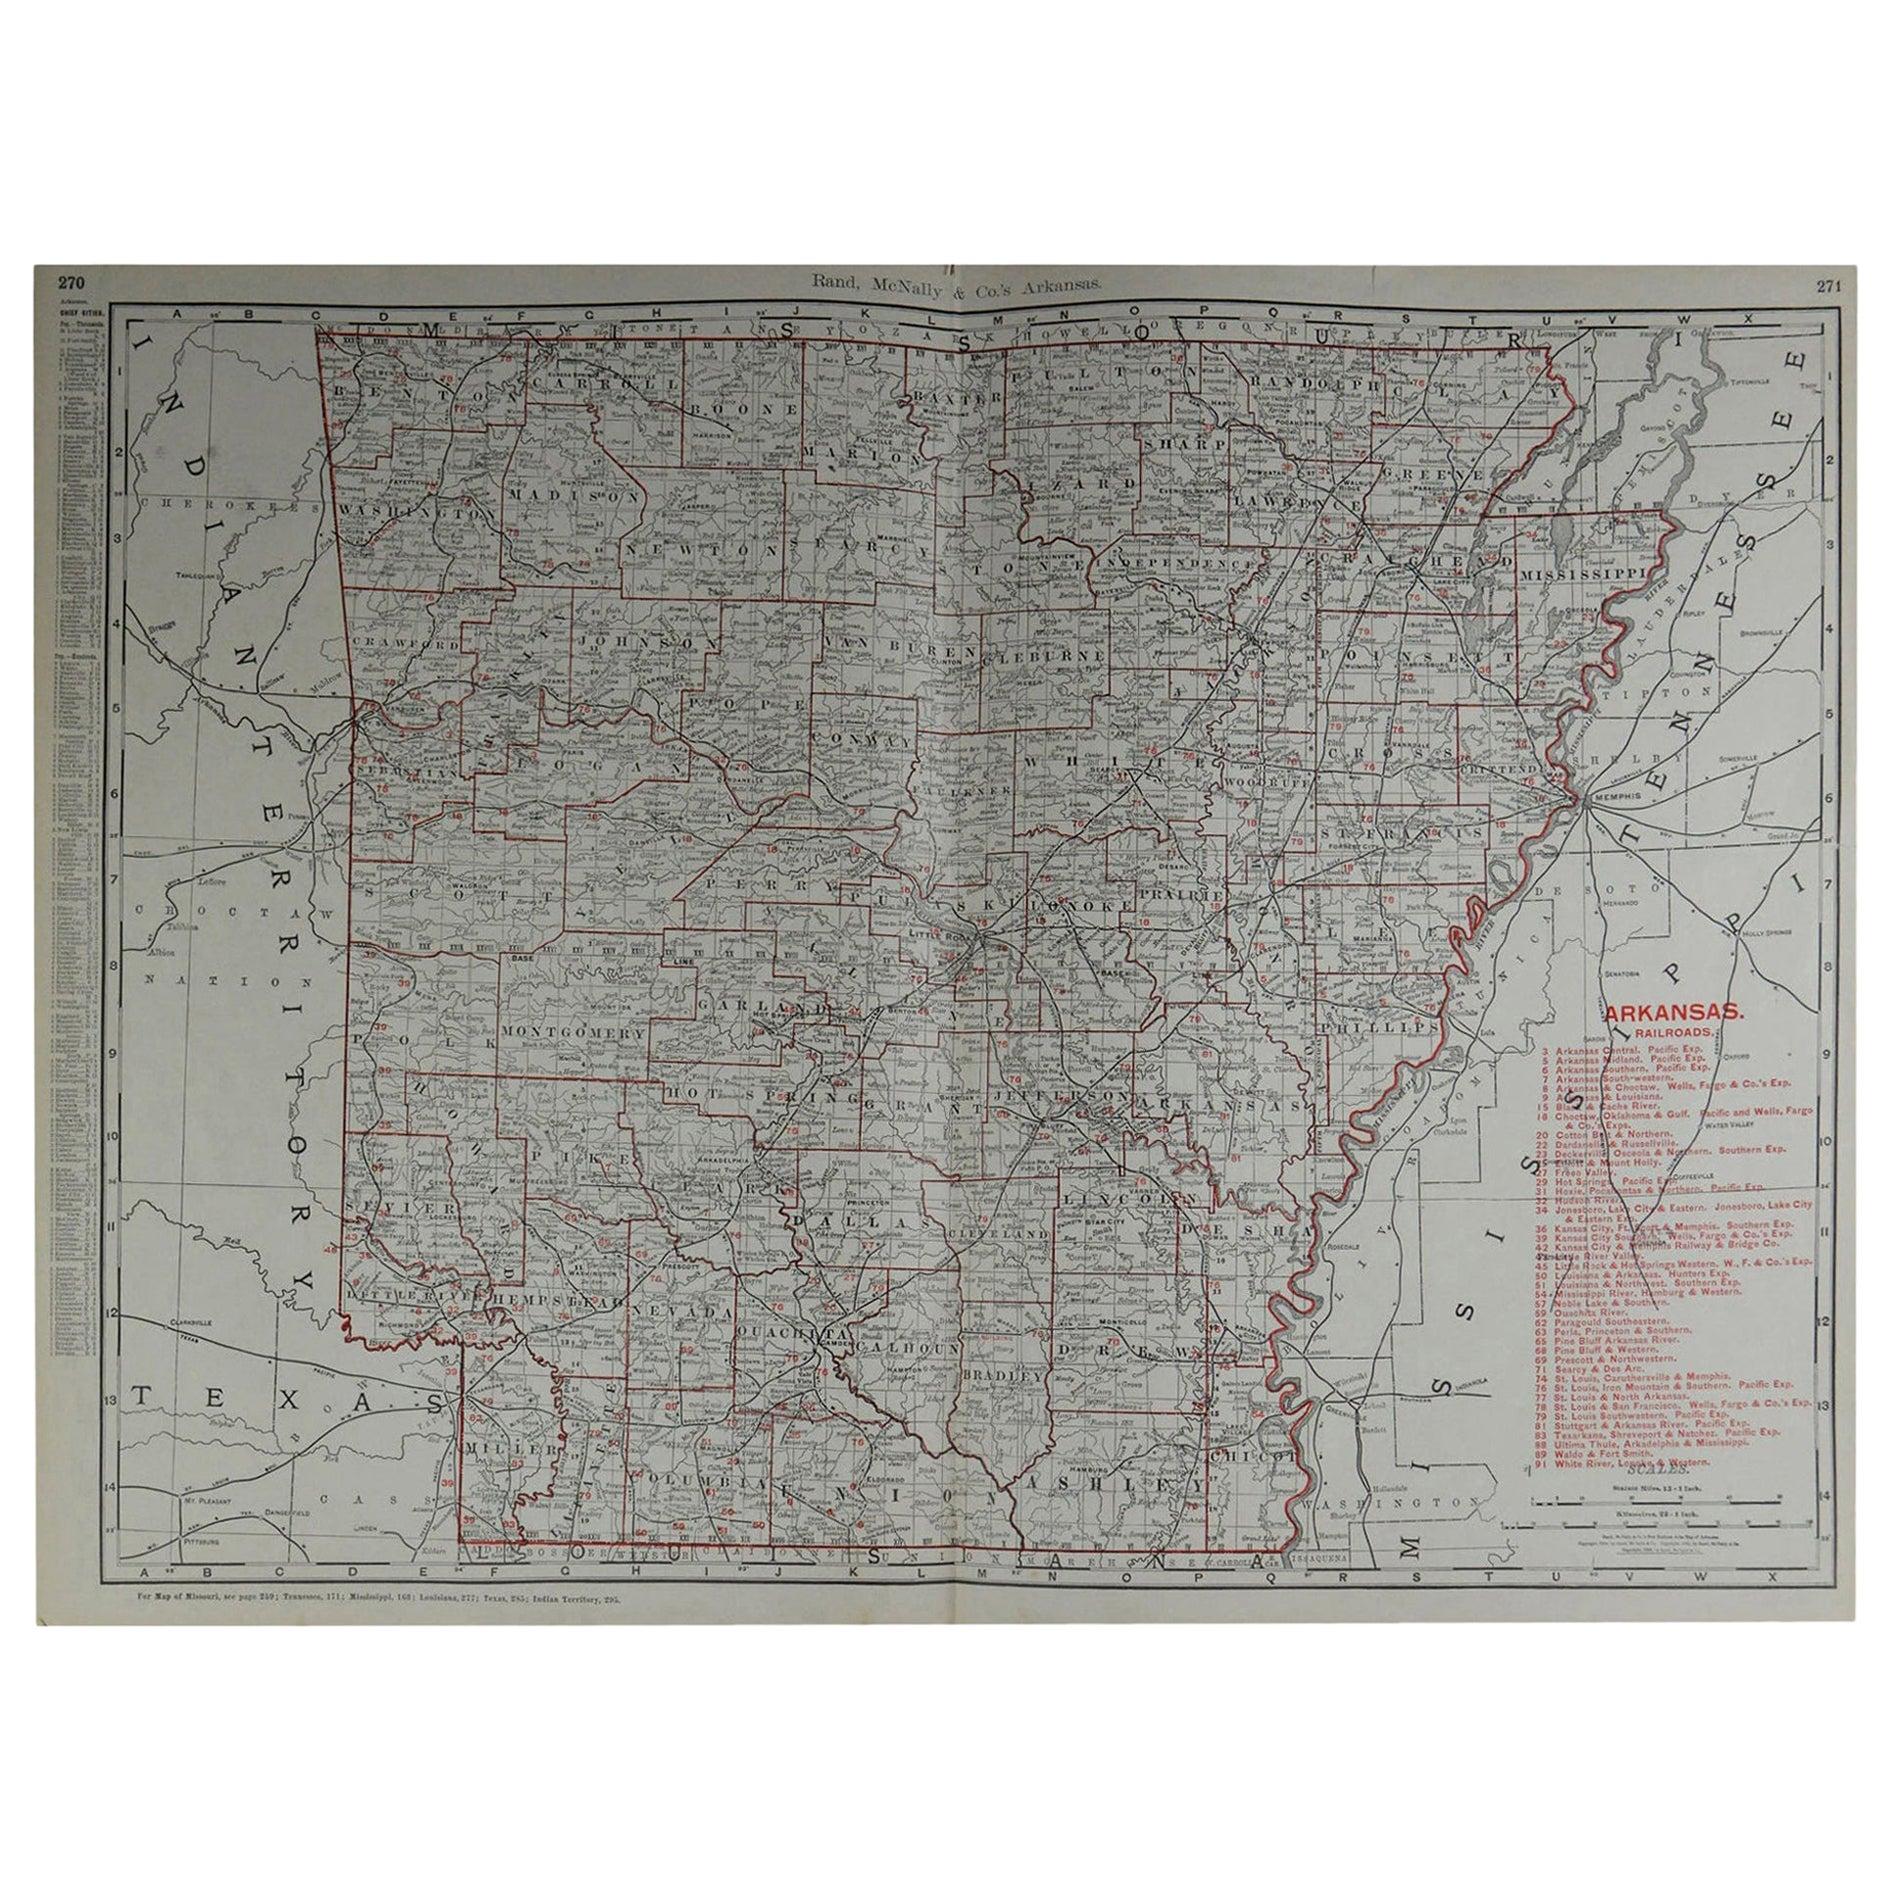 Large Original Antique Map of Arkansas by Rand McNally, circa 1900